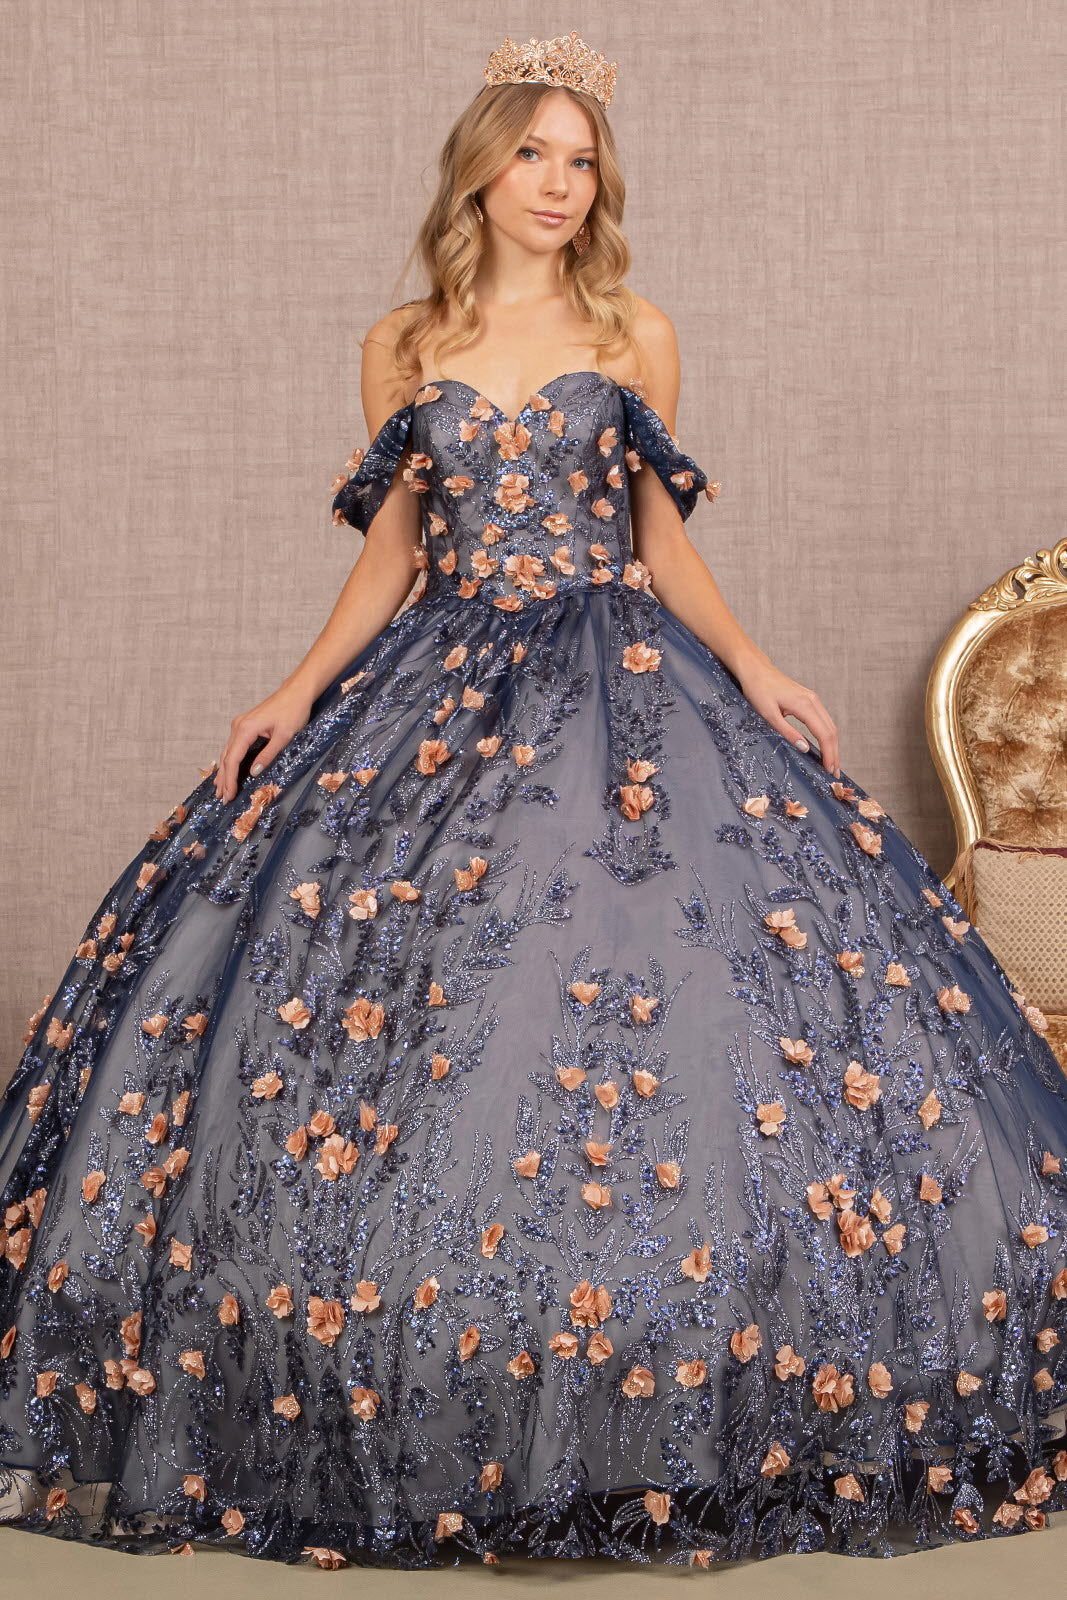 Long Off Shoulder Floral Applique Quinceanera Dress for $656.99